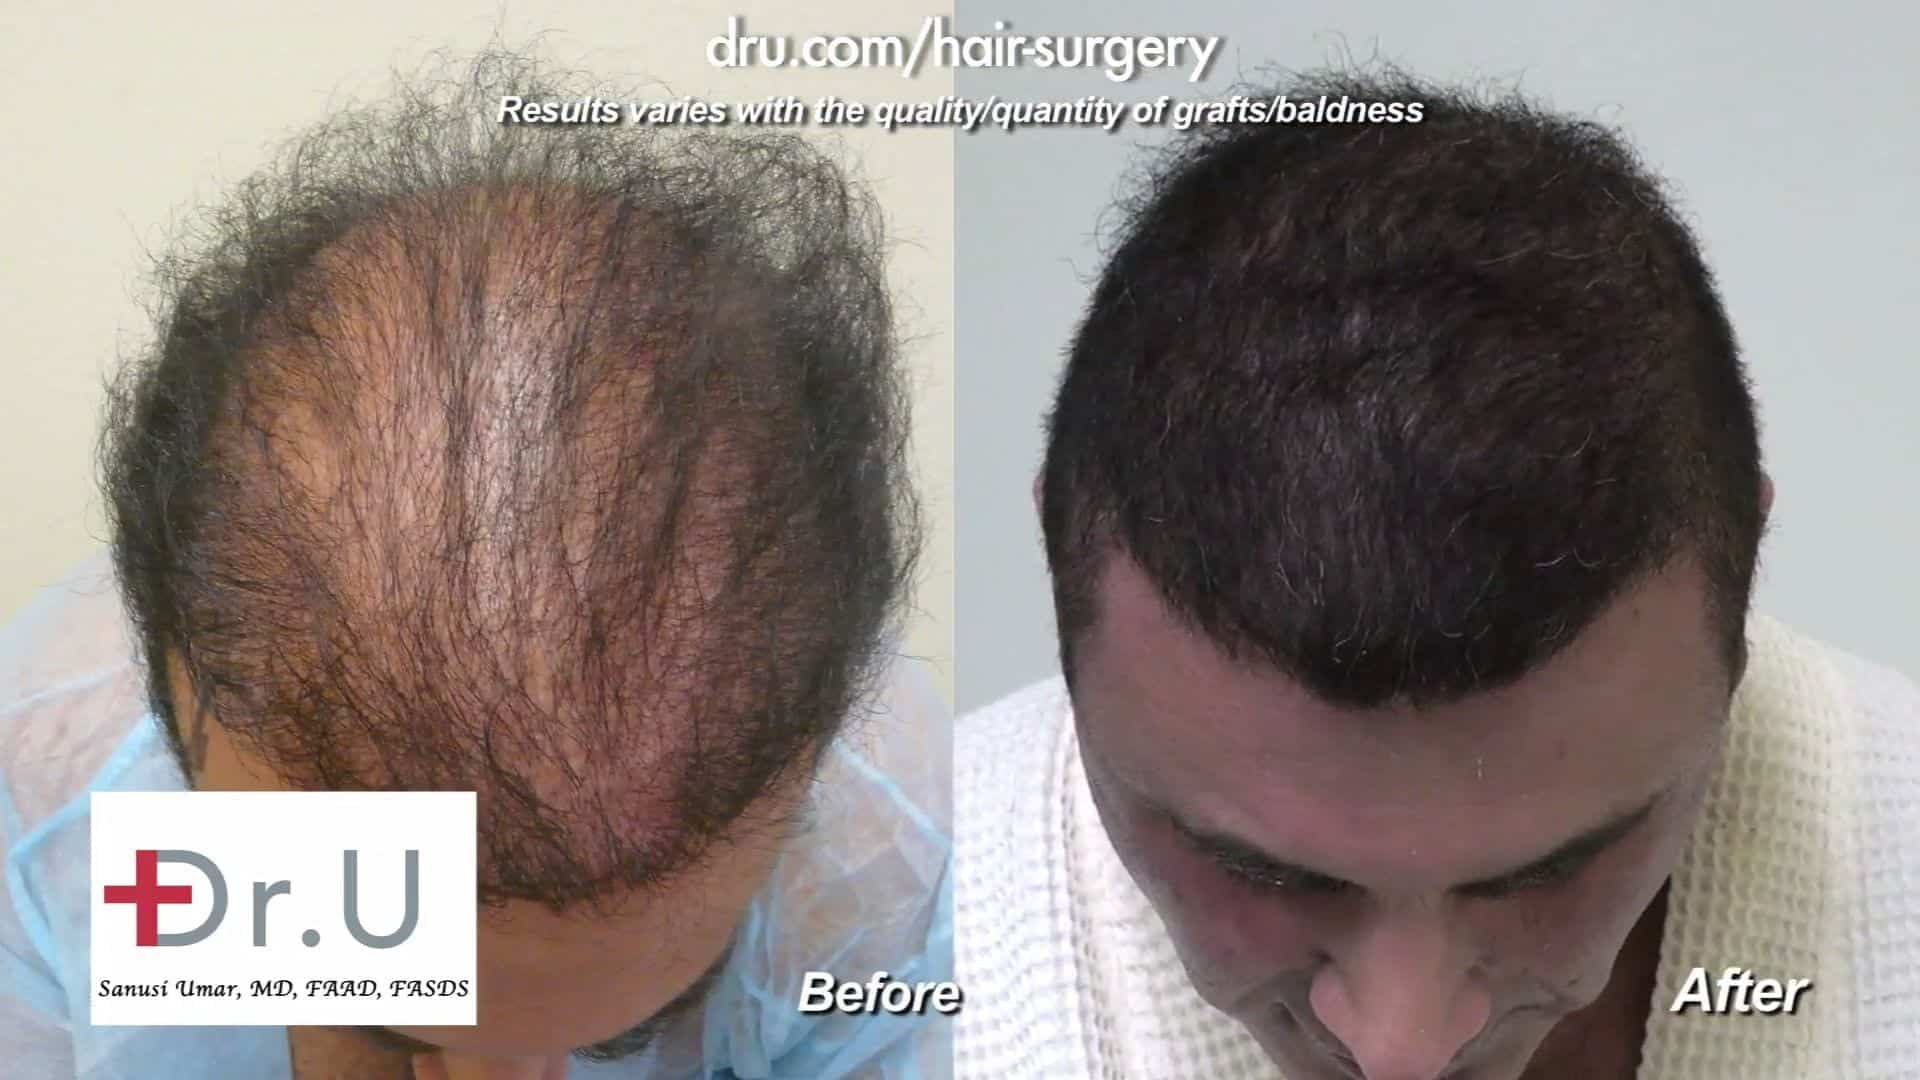 Video: Hair Restoration and Transplant Repair By Dr. U